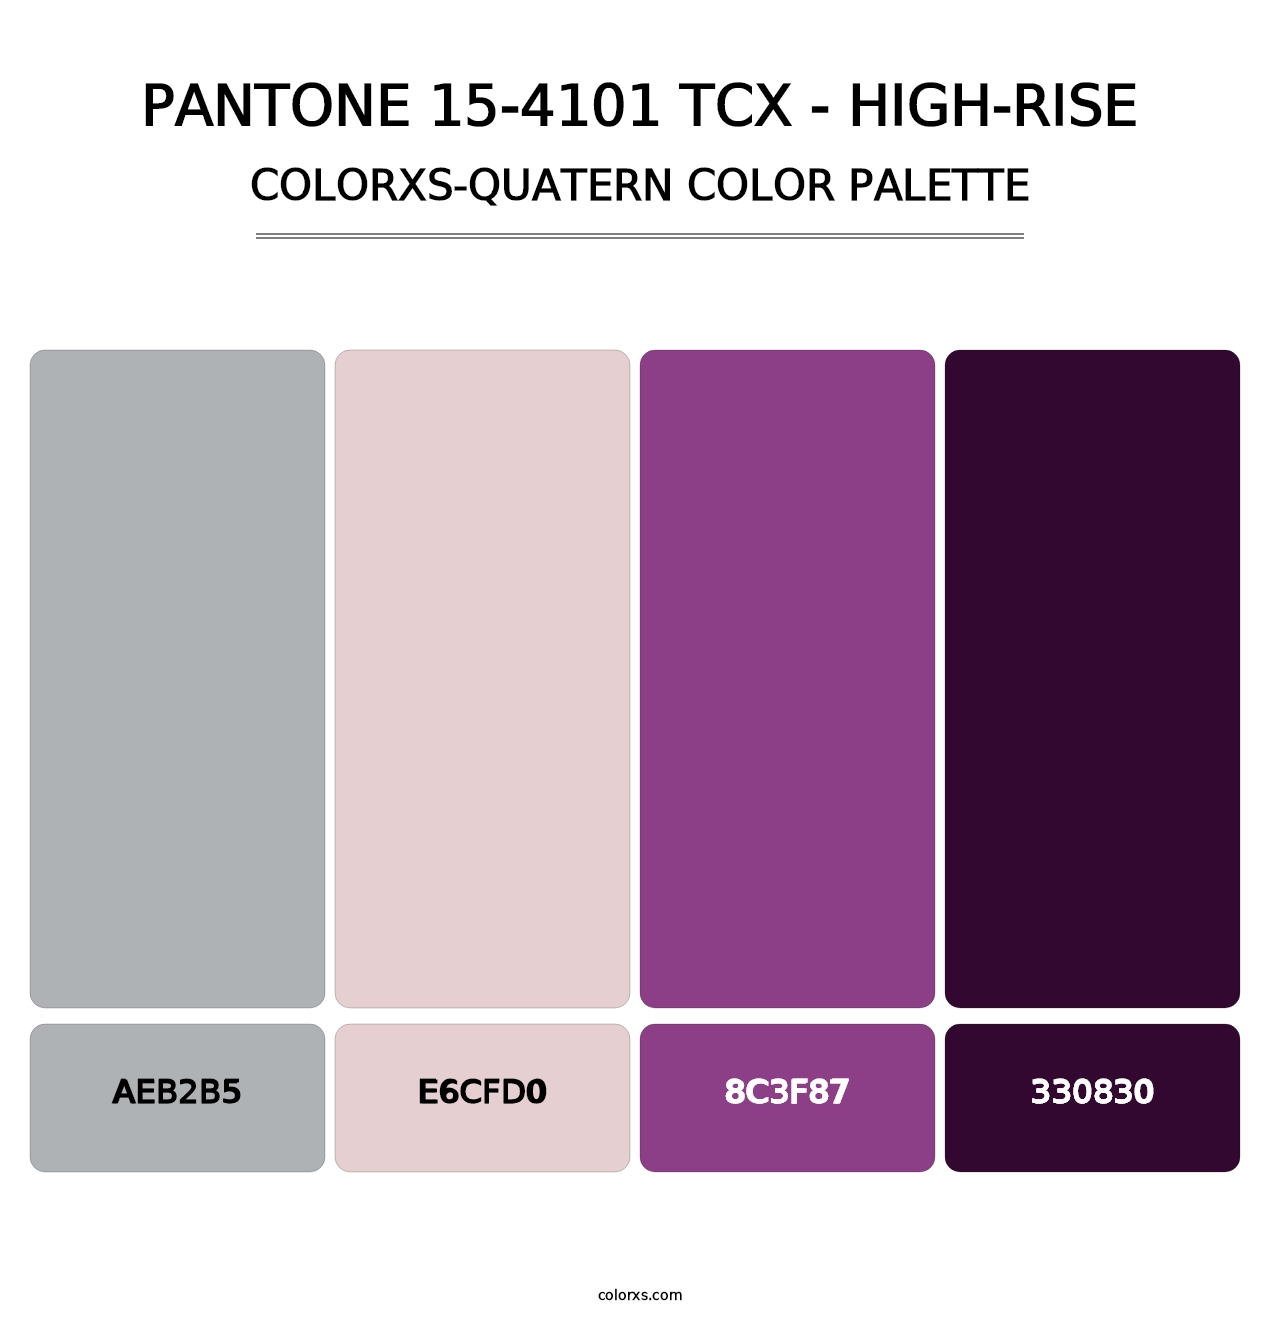 PANTONE 15-4101 TCX - High-rise - Colorxs Quatern Palette